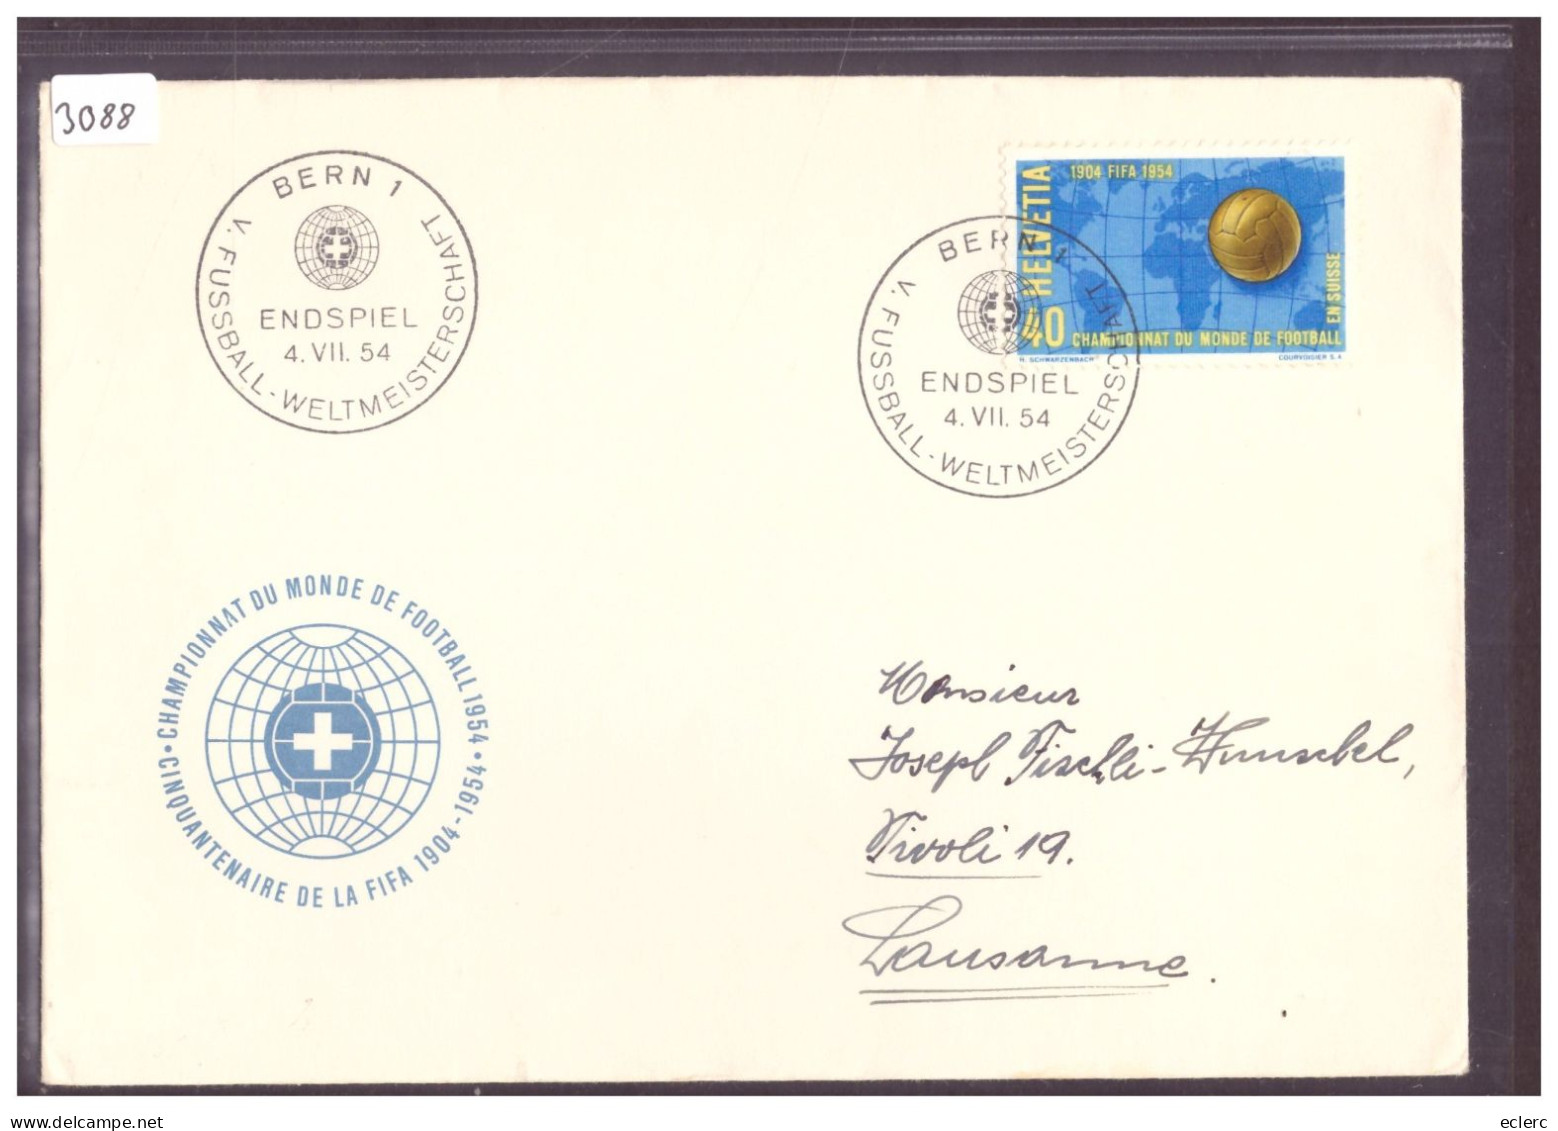 CHAMPIONNAT DU MONDE DE FOOTBALL 1954 - CACHET BERN ENDSPIEL 4.VII.1954 - - Postmark Collection